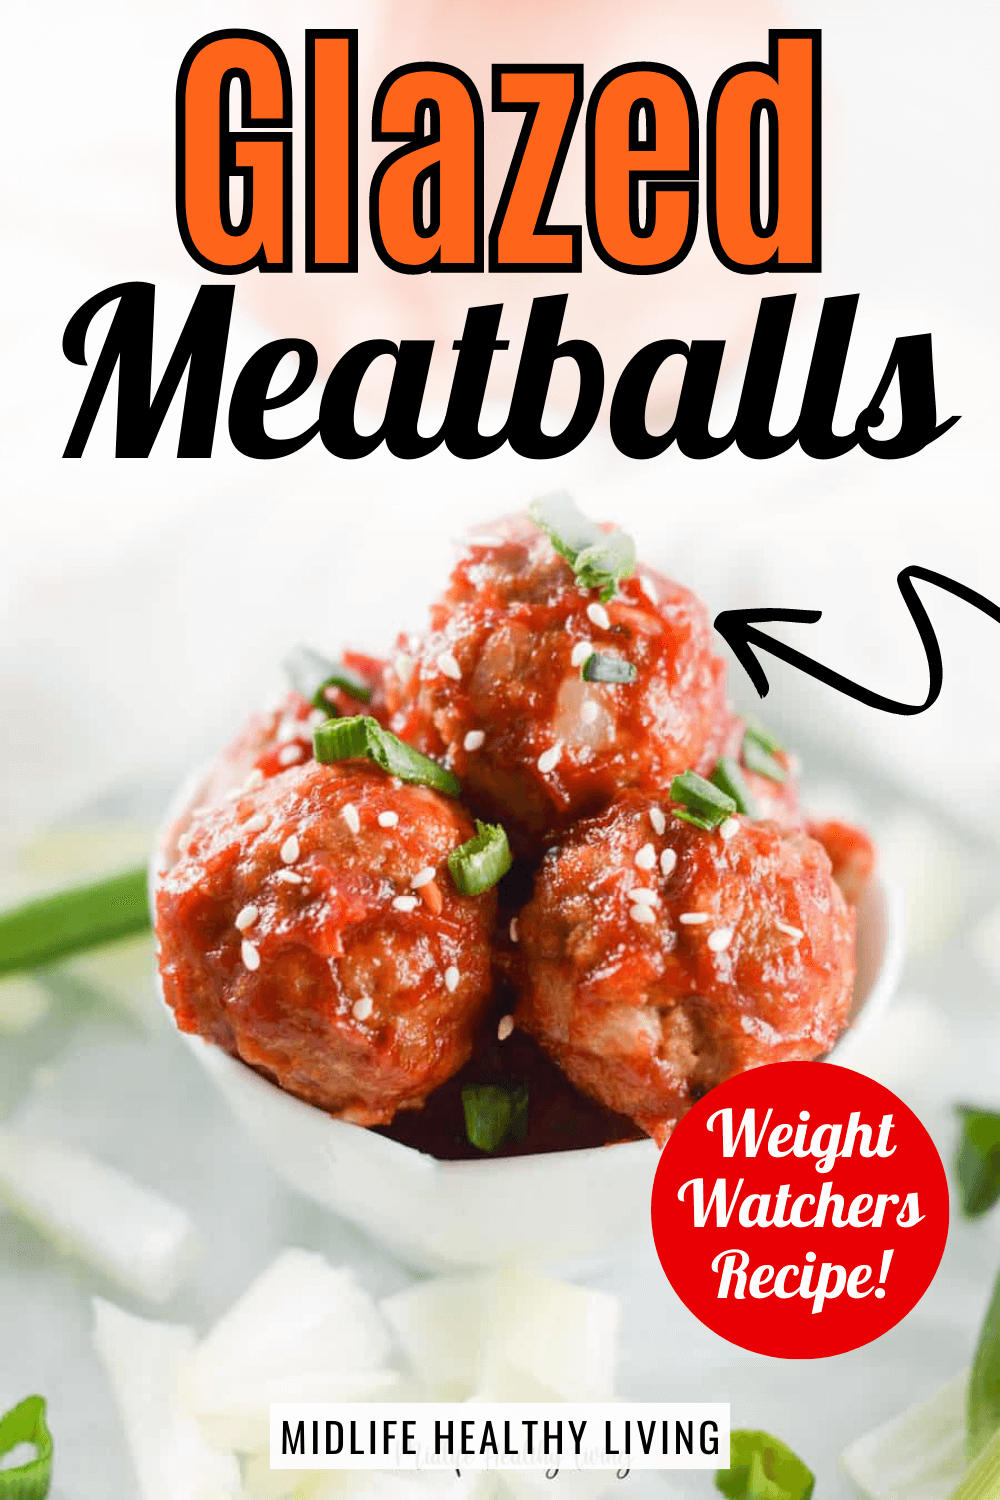 WW Meatballs Recipe